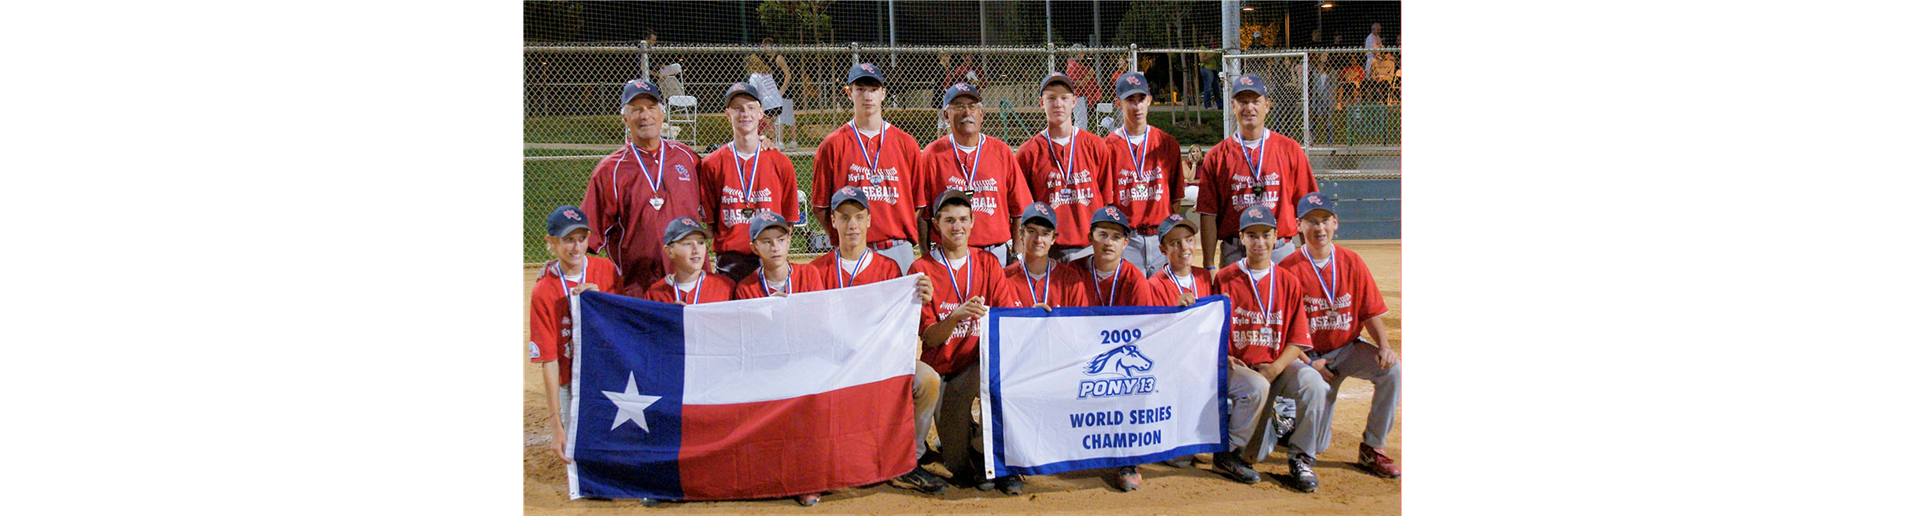 2009 PONY 13 World Series Champions